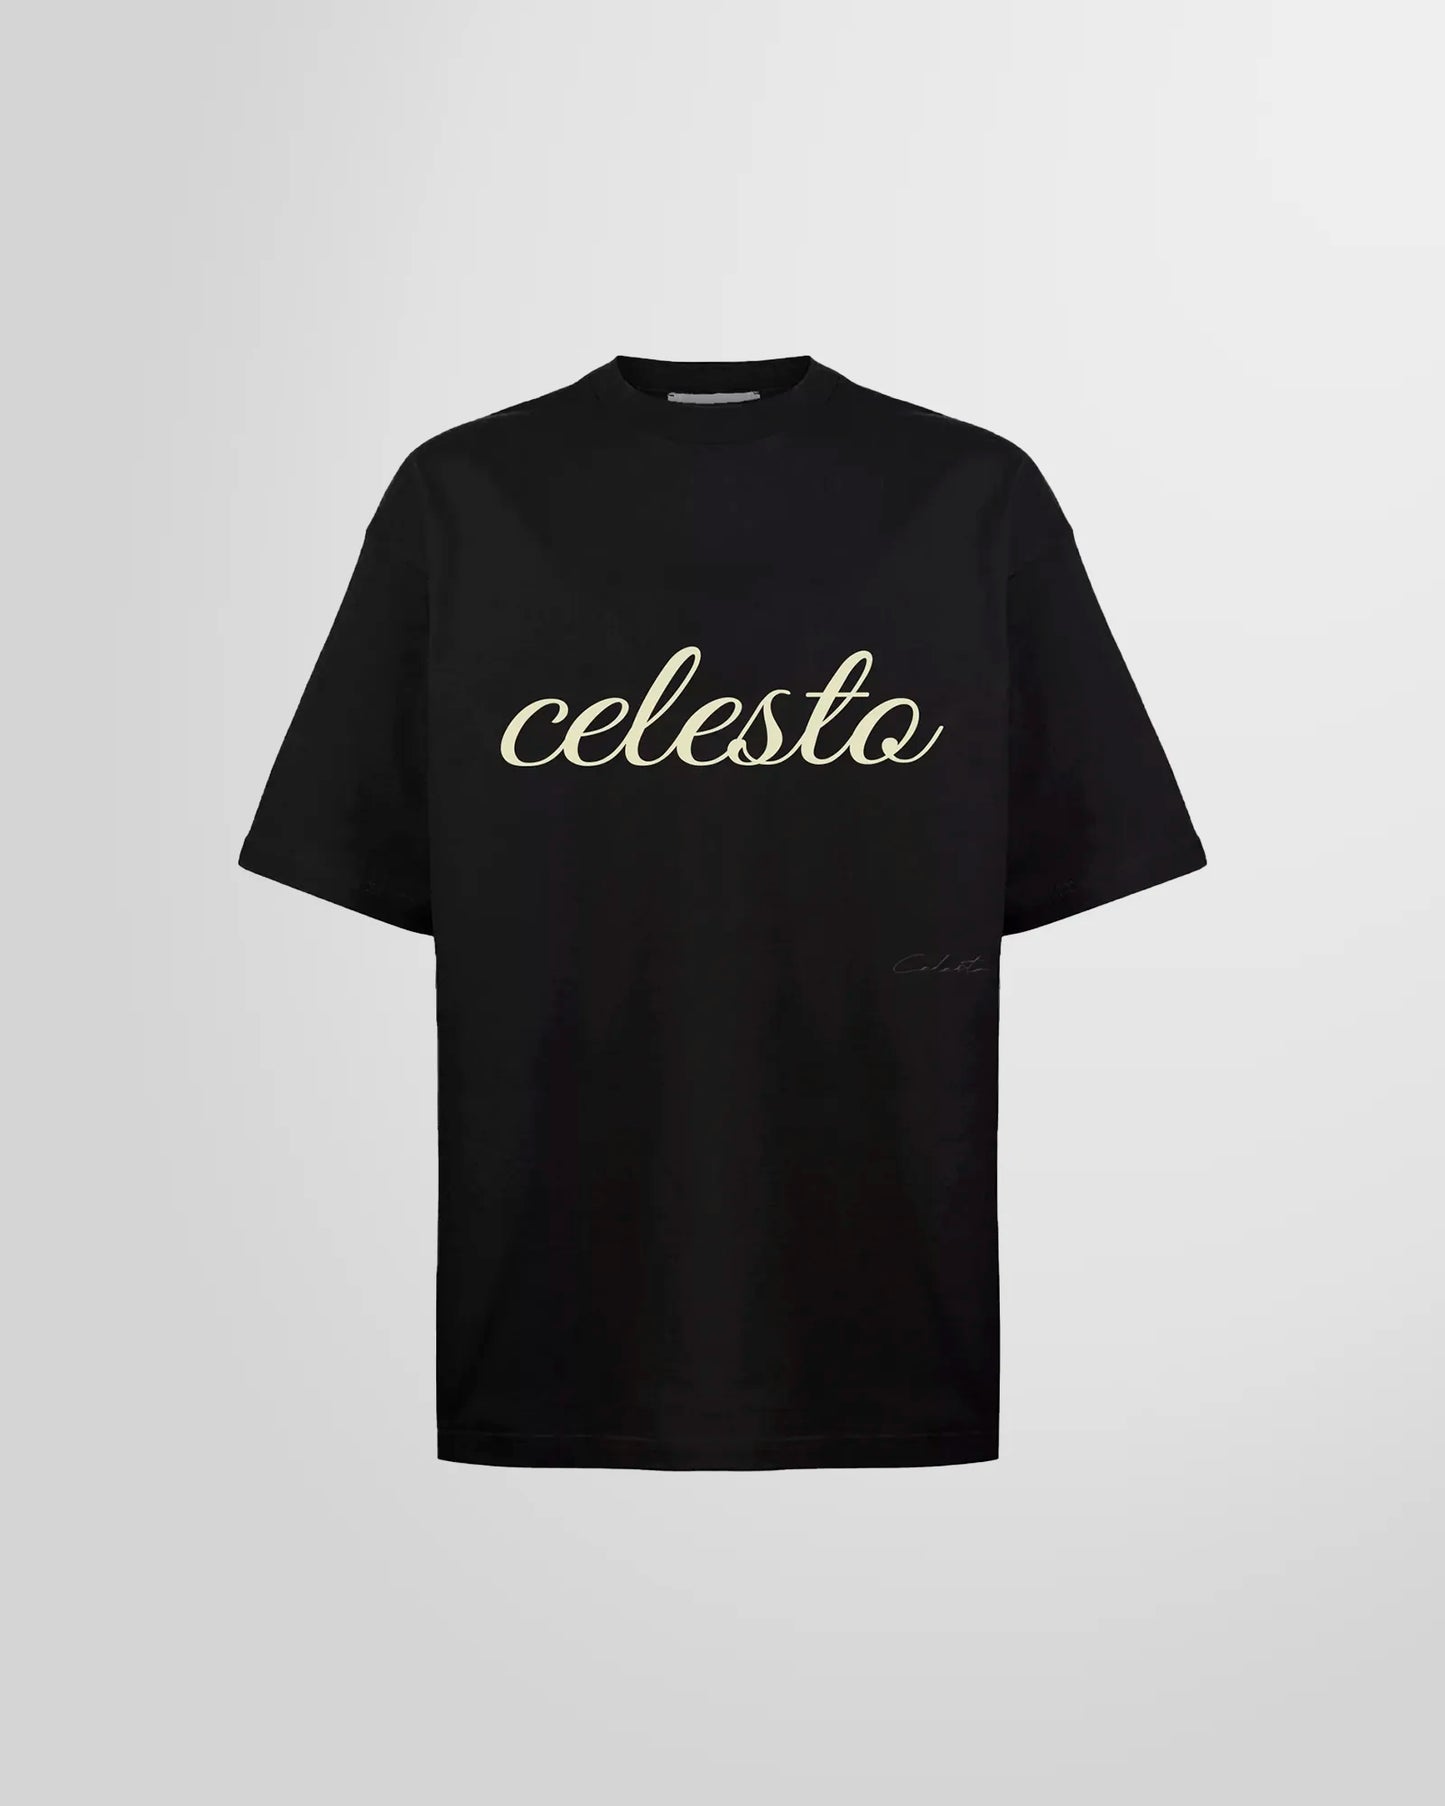 Celesto Black P1 Pole Position T-Shirt